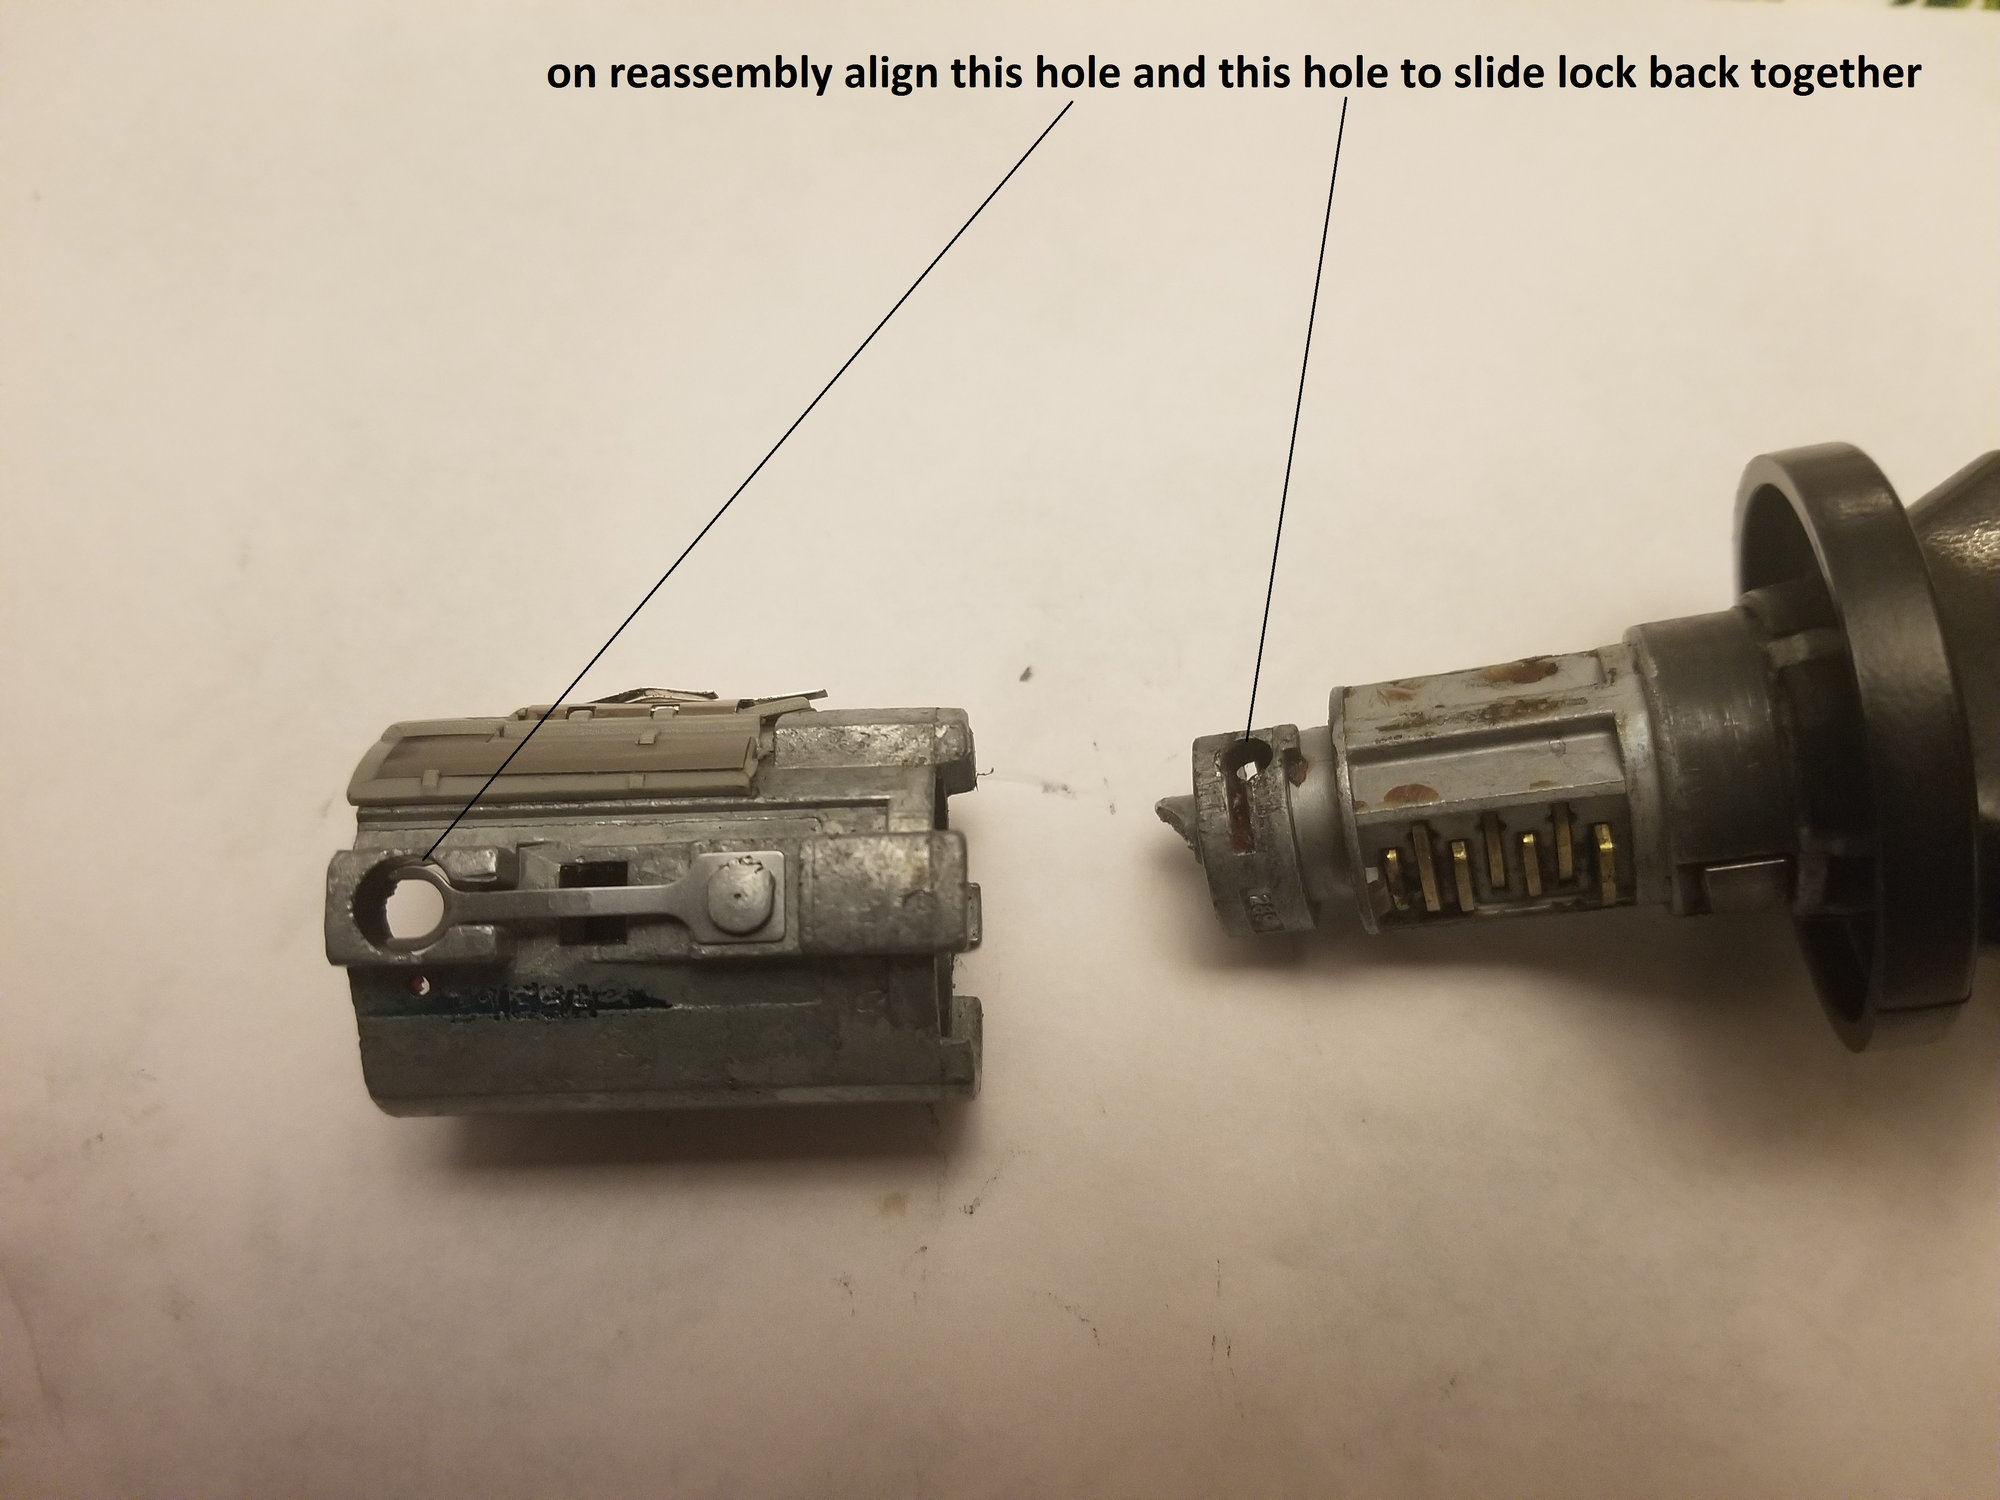 Dorman 101-314 Ignition Lock Key with Transponder 